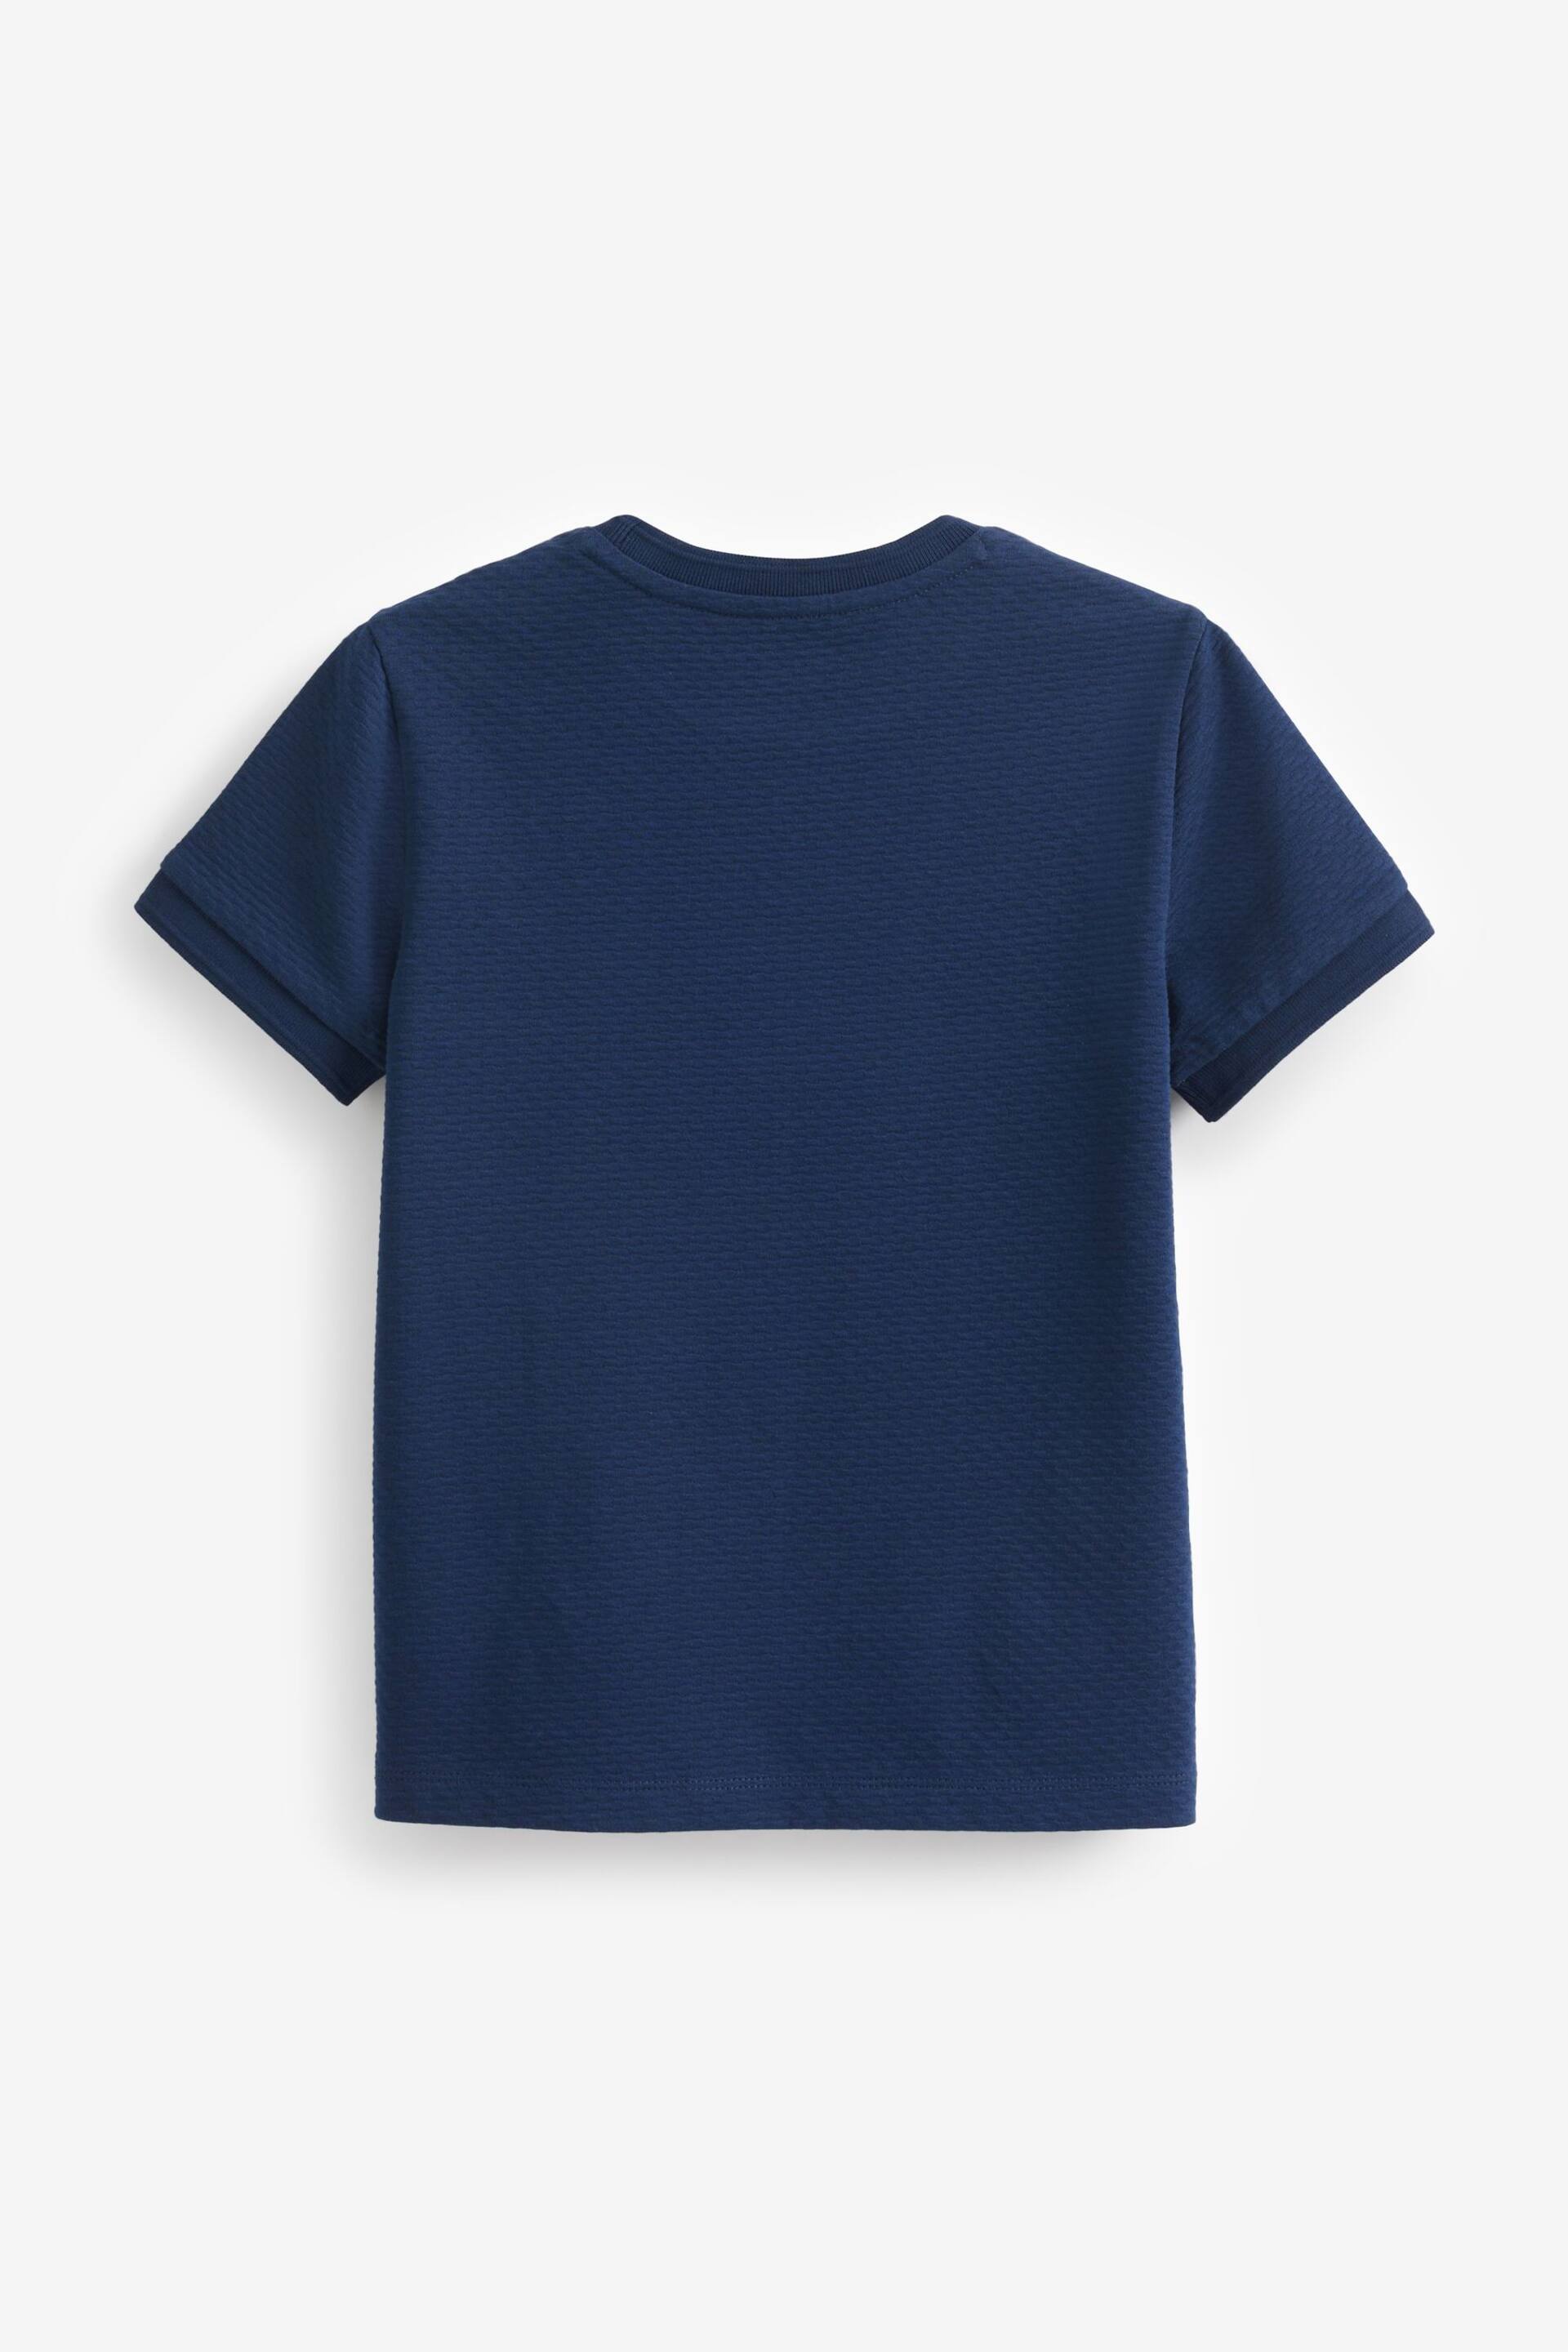 Navy Blue Short Sleeve Textured T-Shirt (3-16yrs) - Image 2 of 3